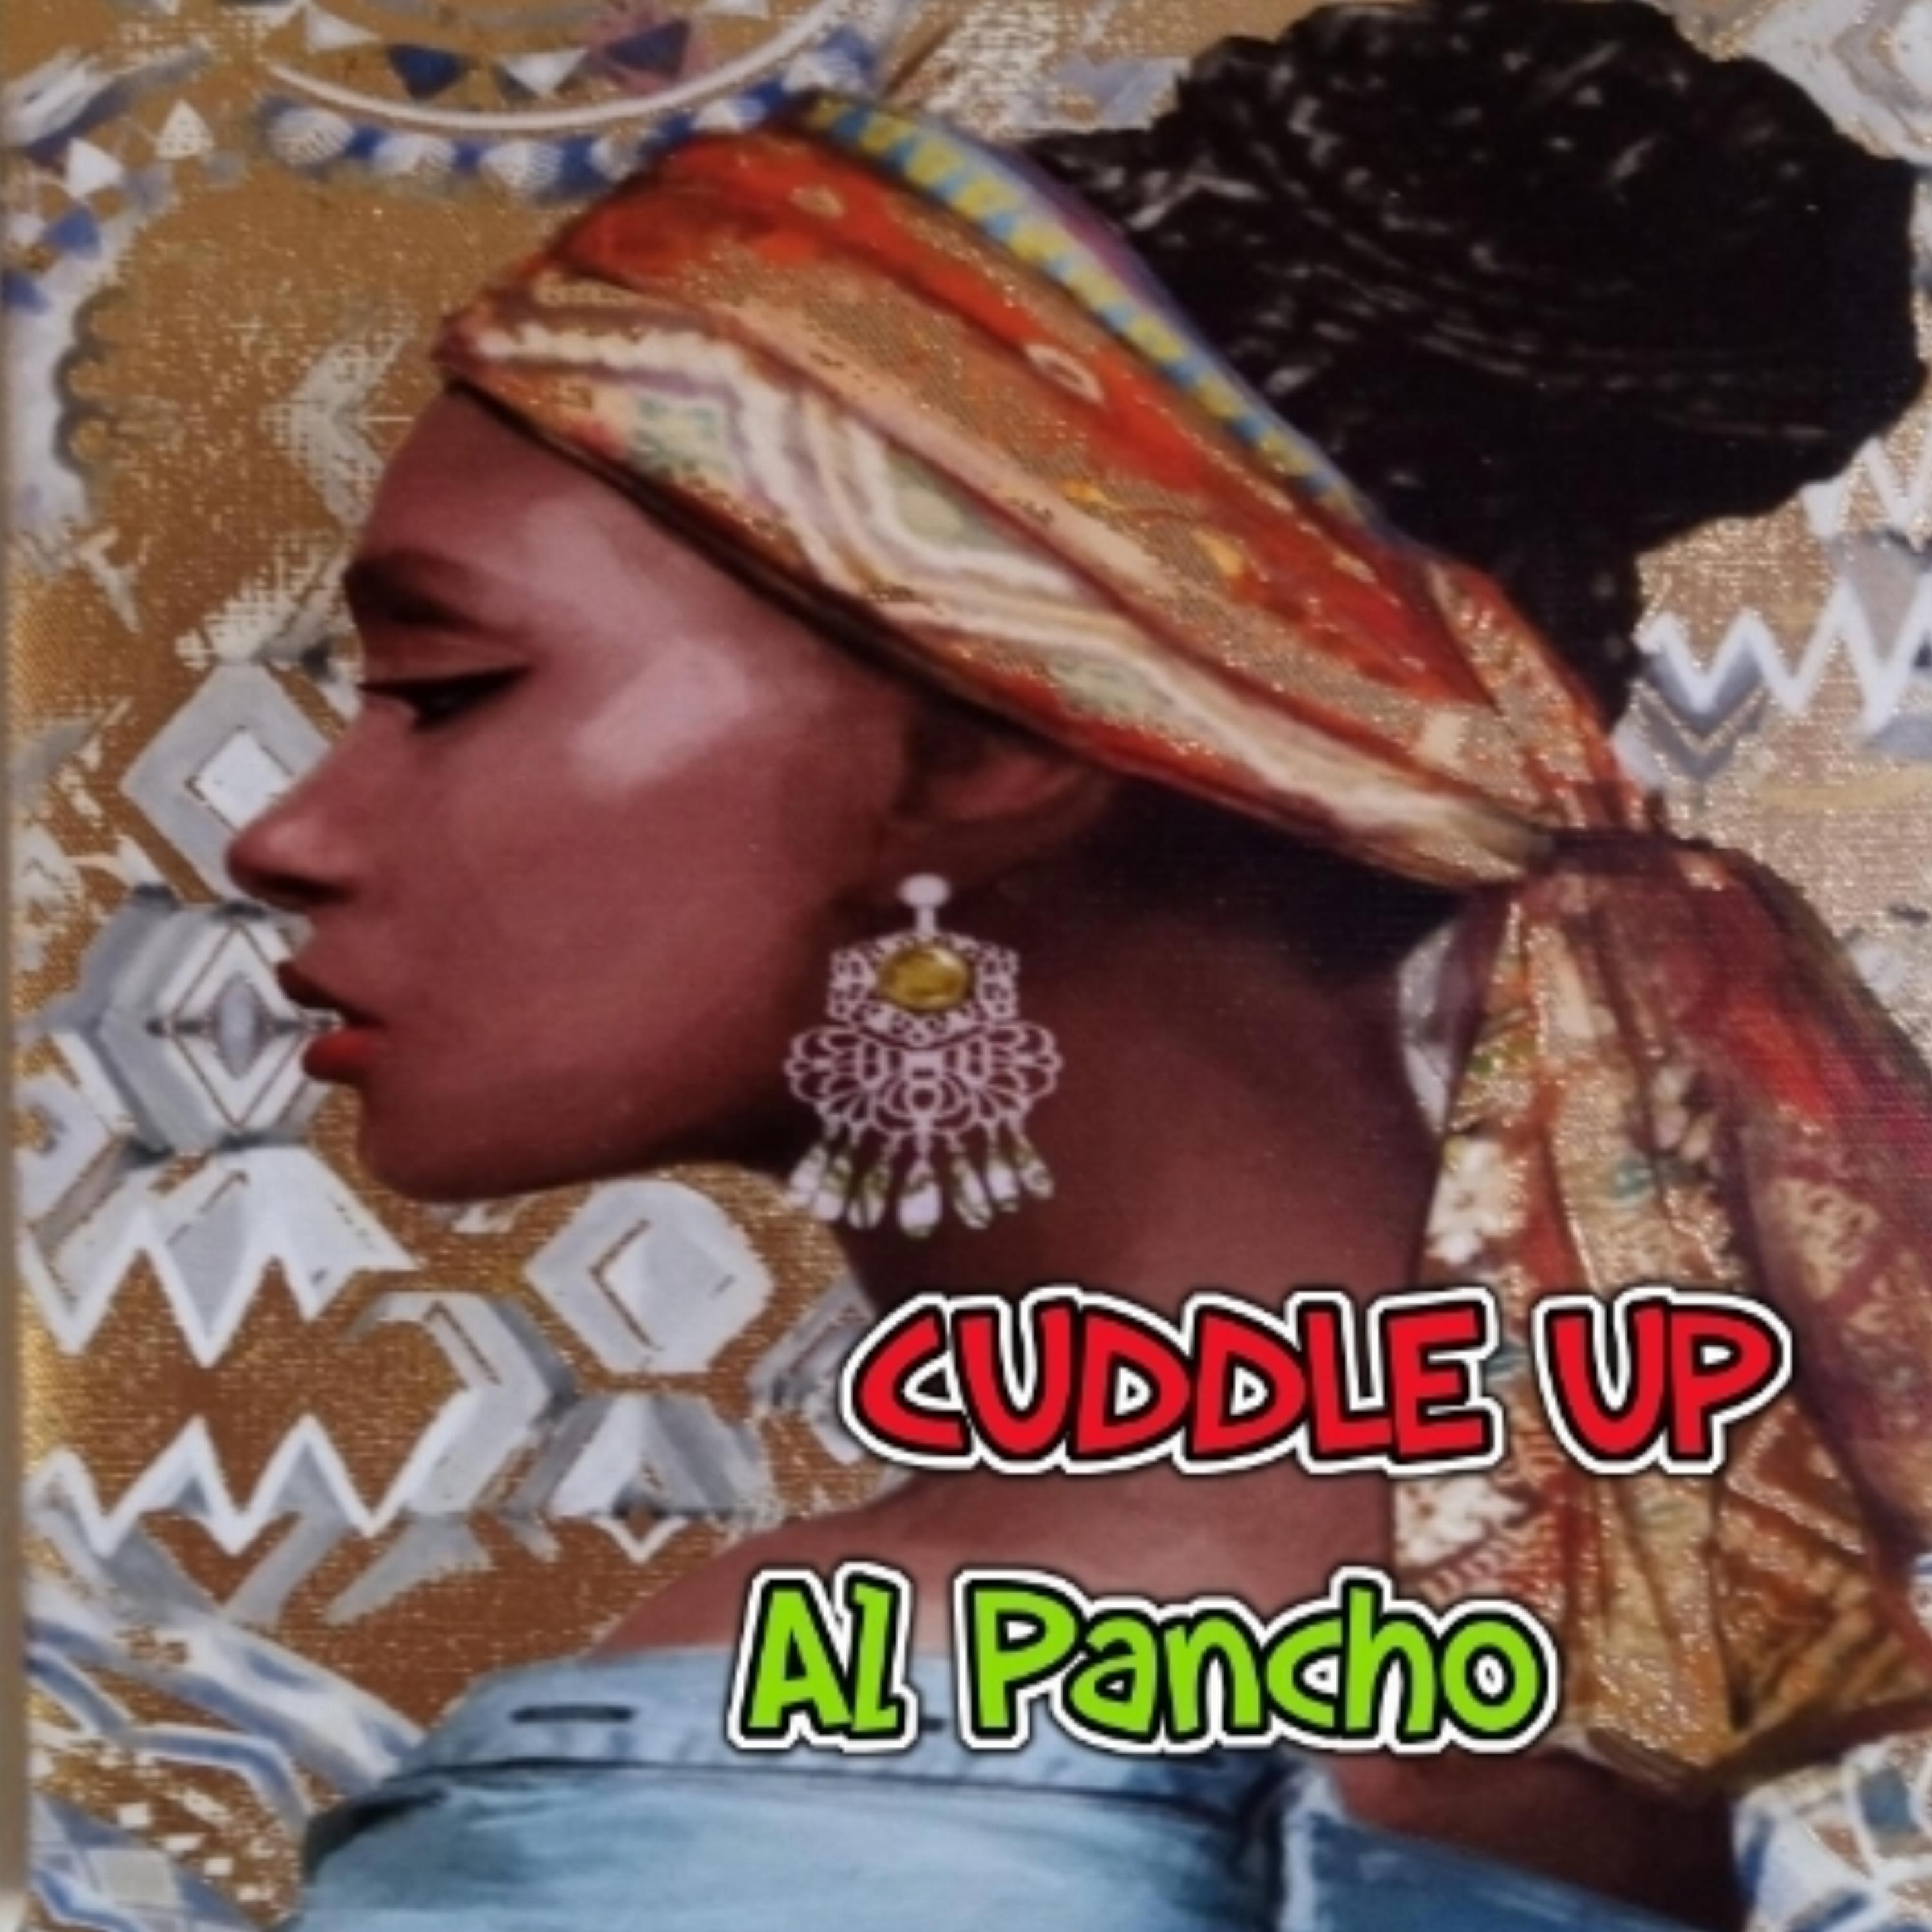 Al Pancho - Cuddle Up